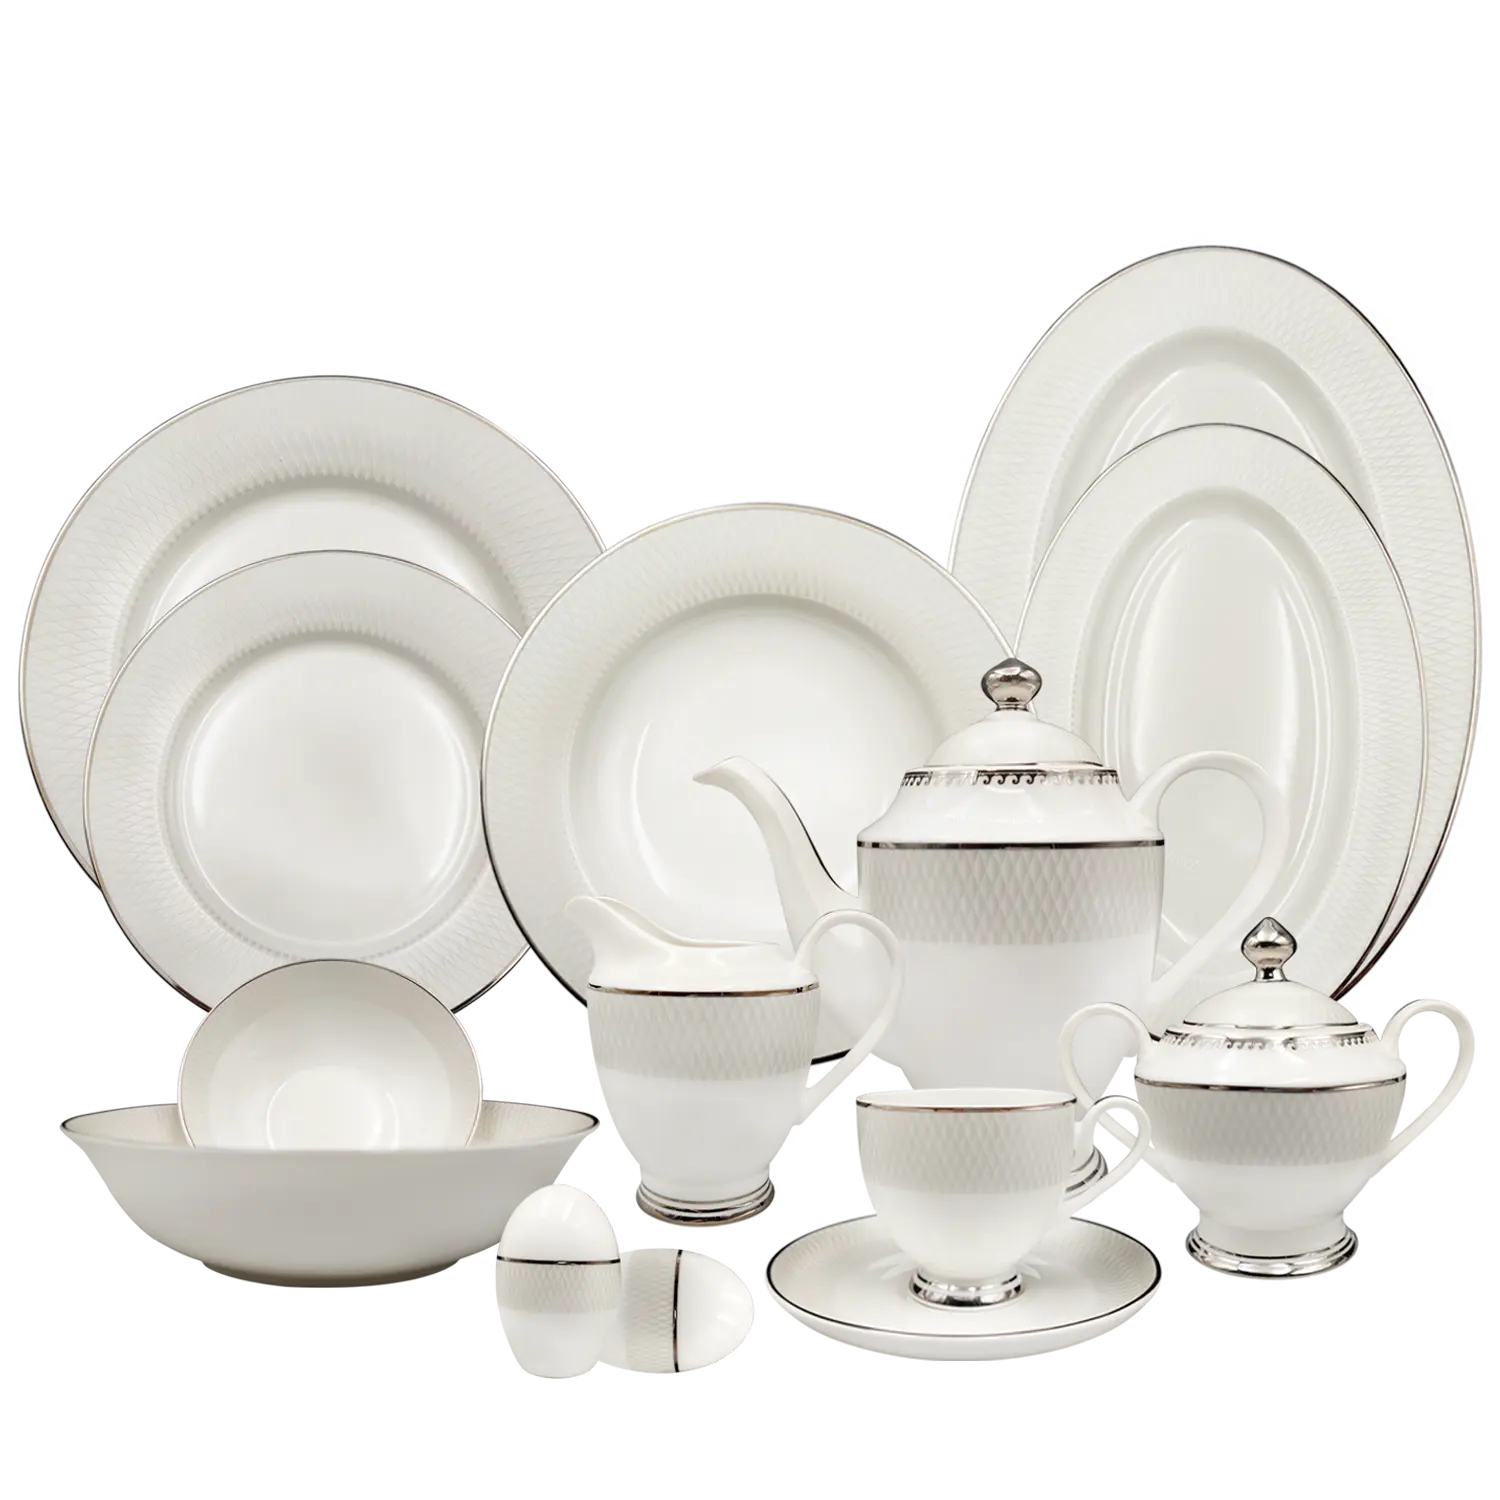 2021 new style fine bone china dinner set best price tableware set restaurant&household crockery dinnerwares